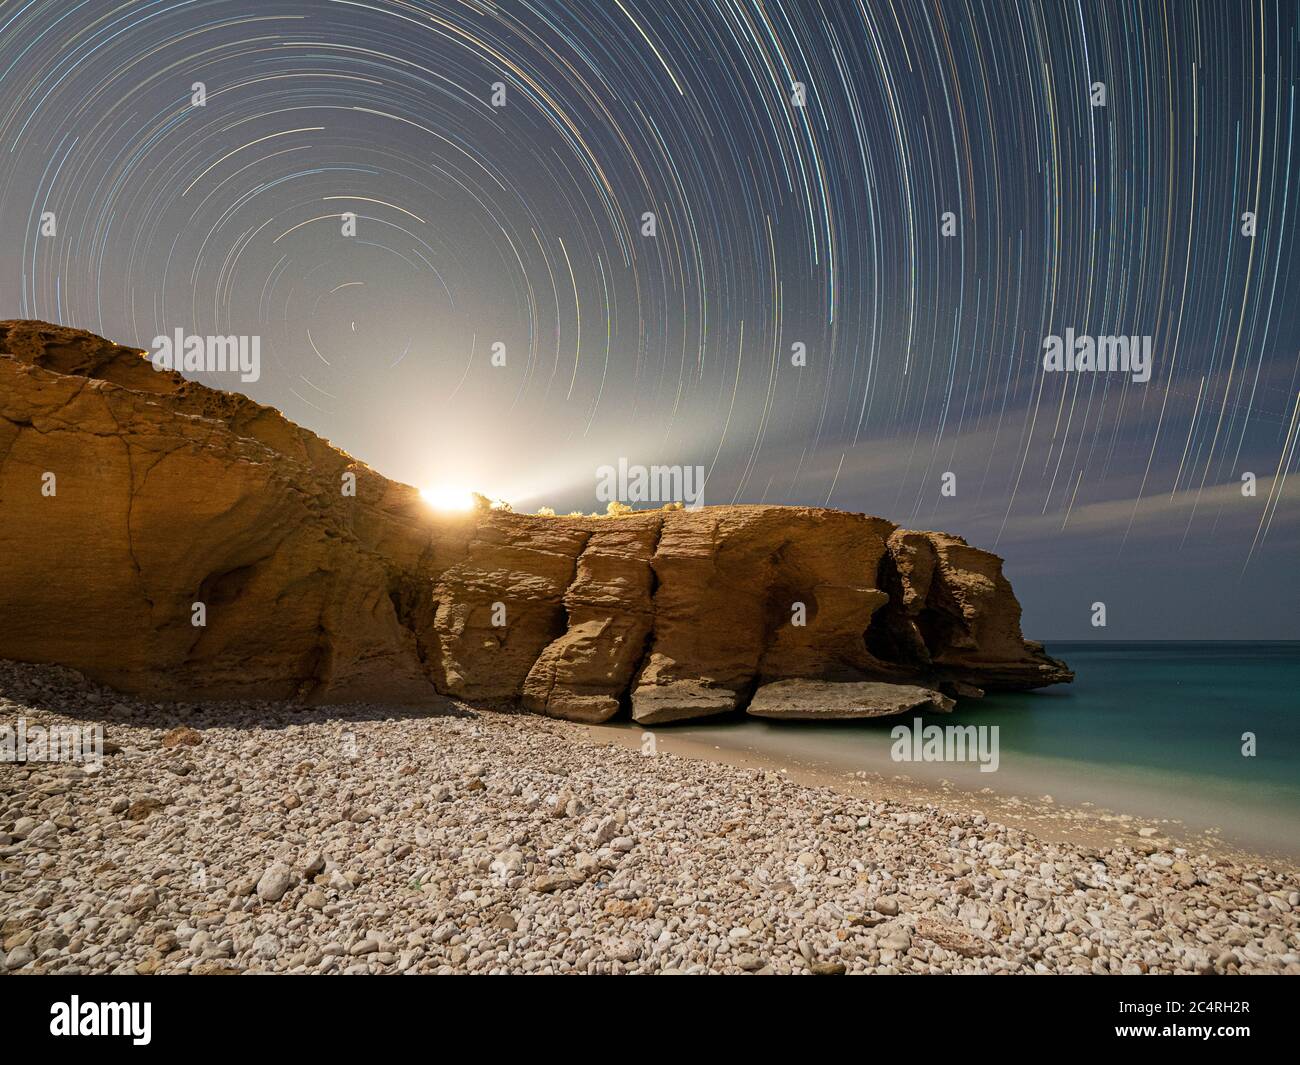 The coastline at night near Fins in the Sultanate of Oman. Stock Photo